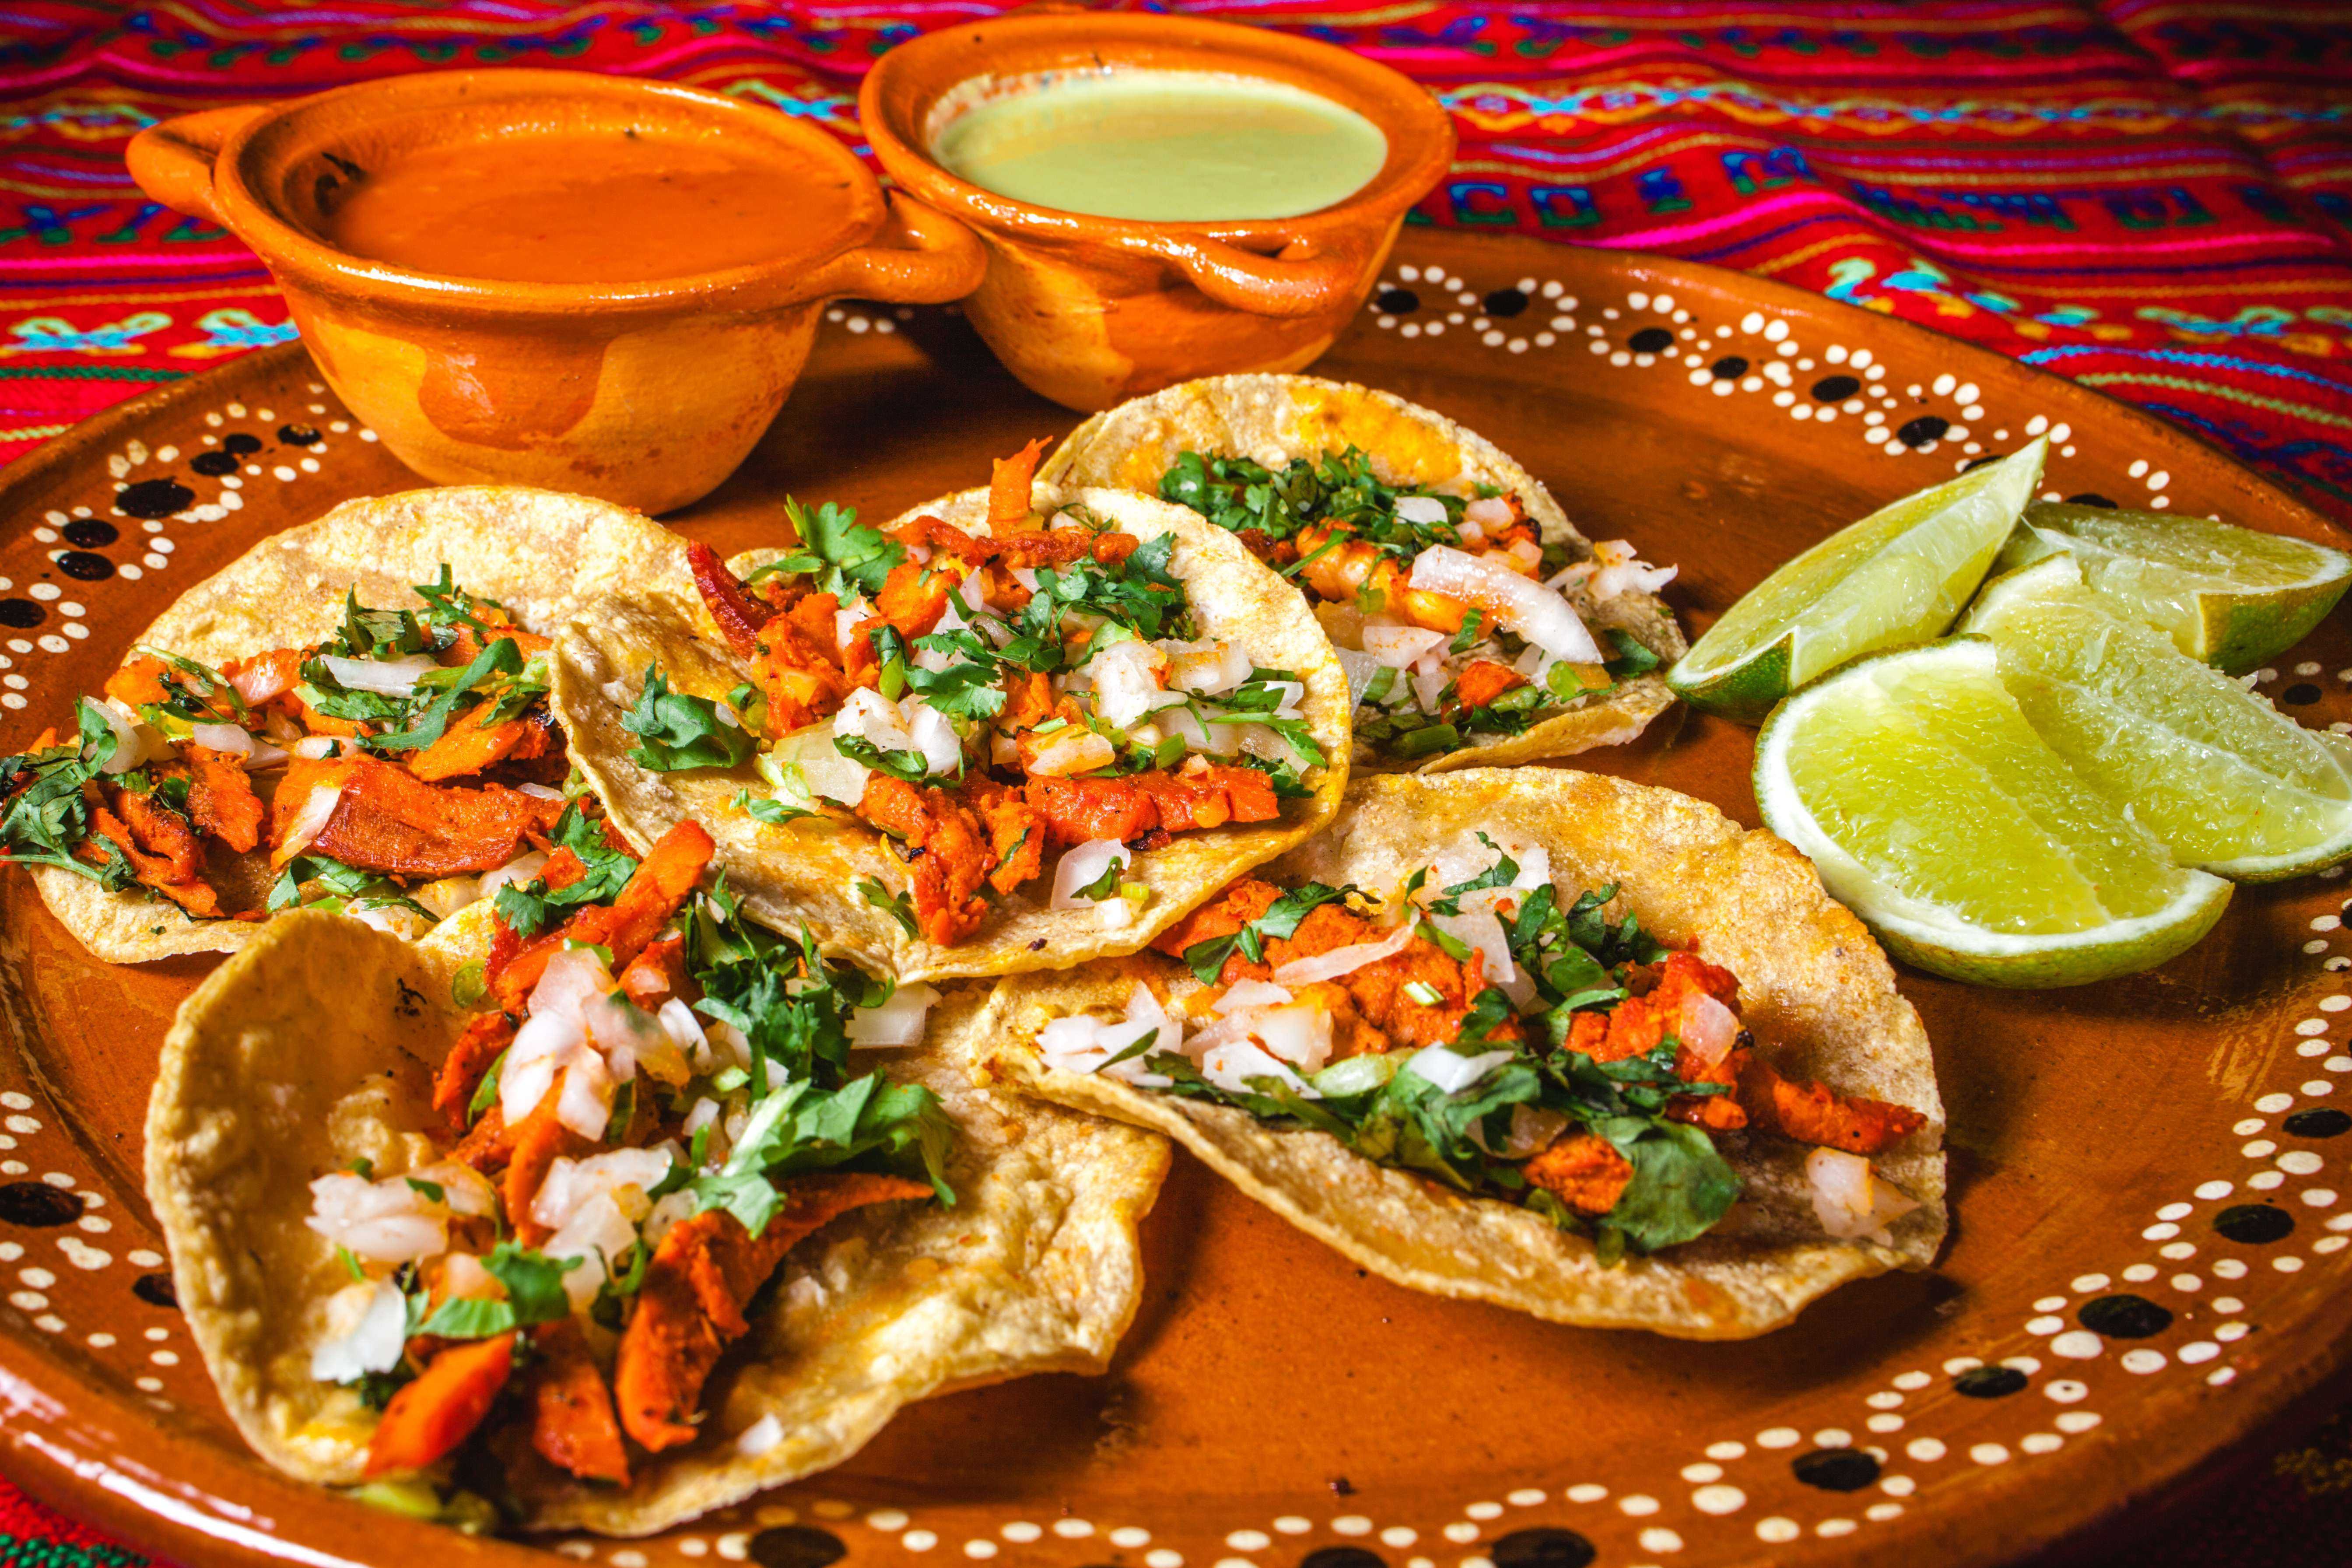 Национальная кухня центр. Мексика Такос. Национальное блюдо Мексики Такос. Тако Мексиканская кухня. Национальная еда Мехико.